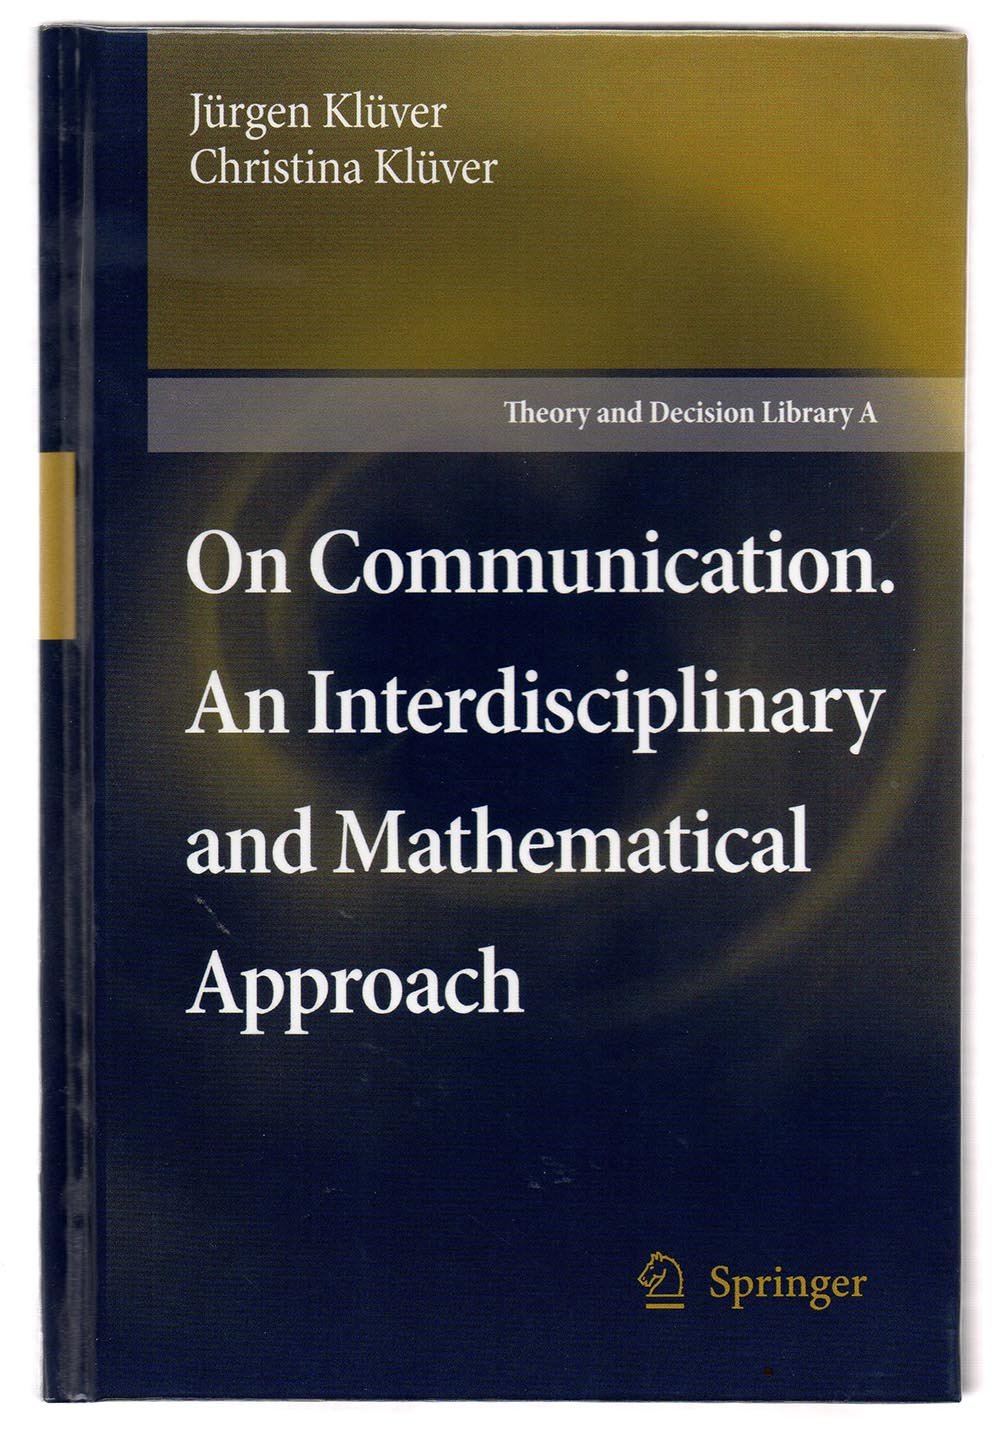 On Communication. An Interdisciplinary and Mathematical Approach